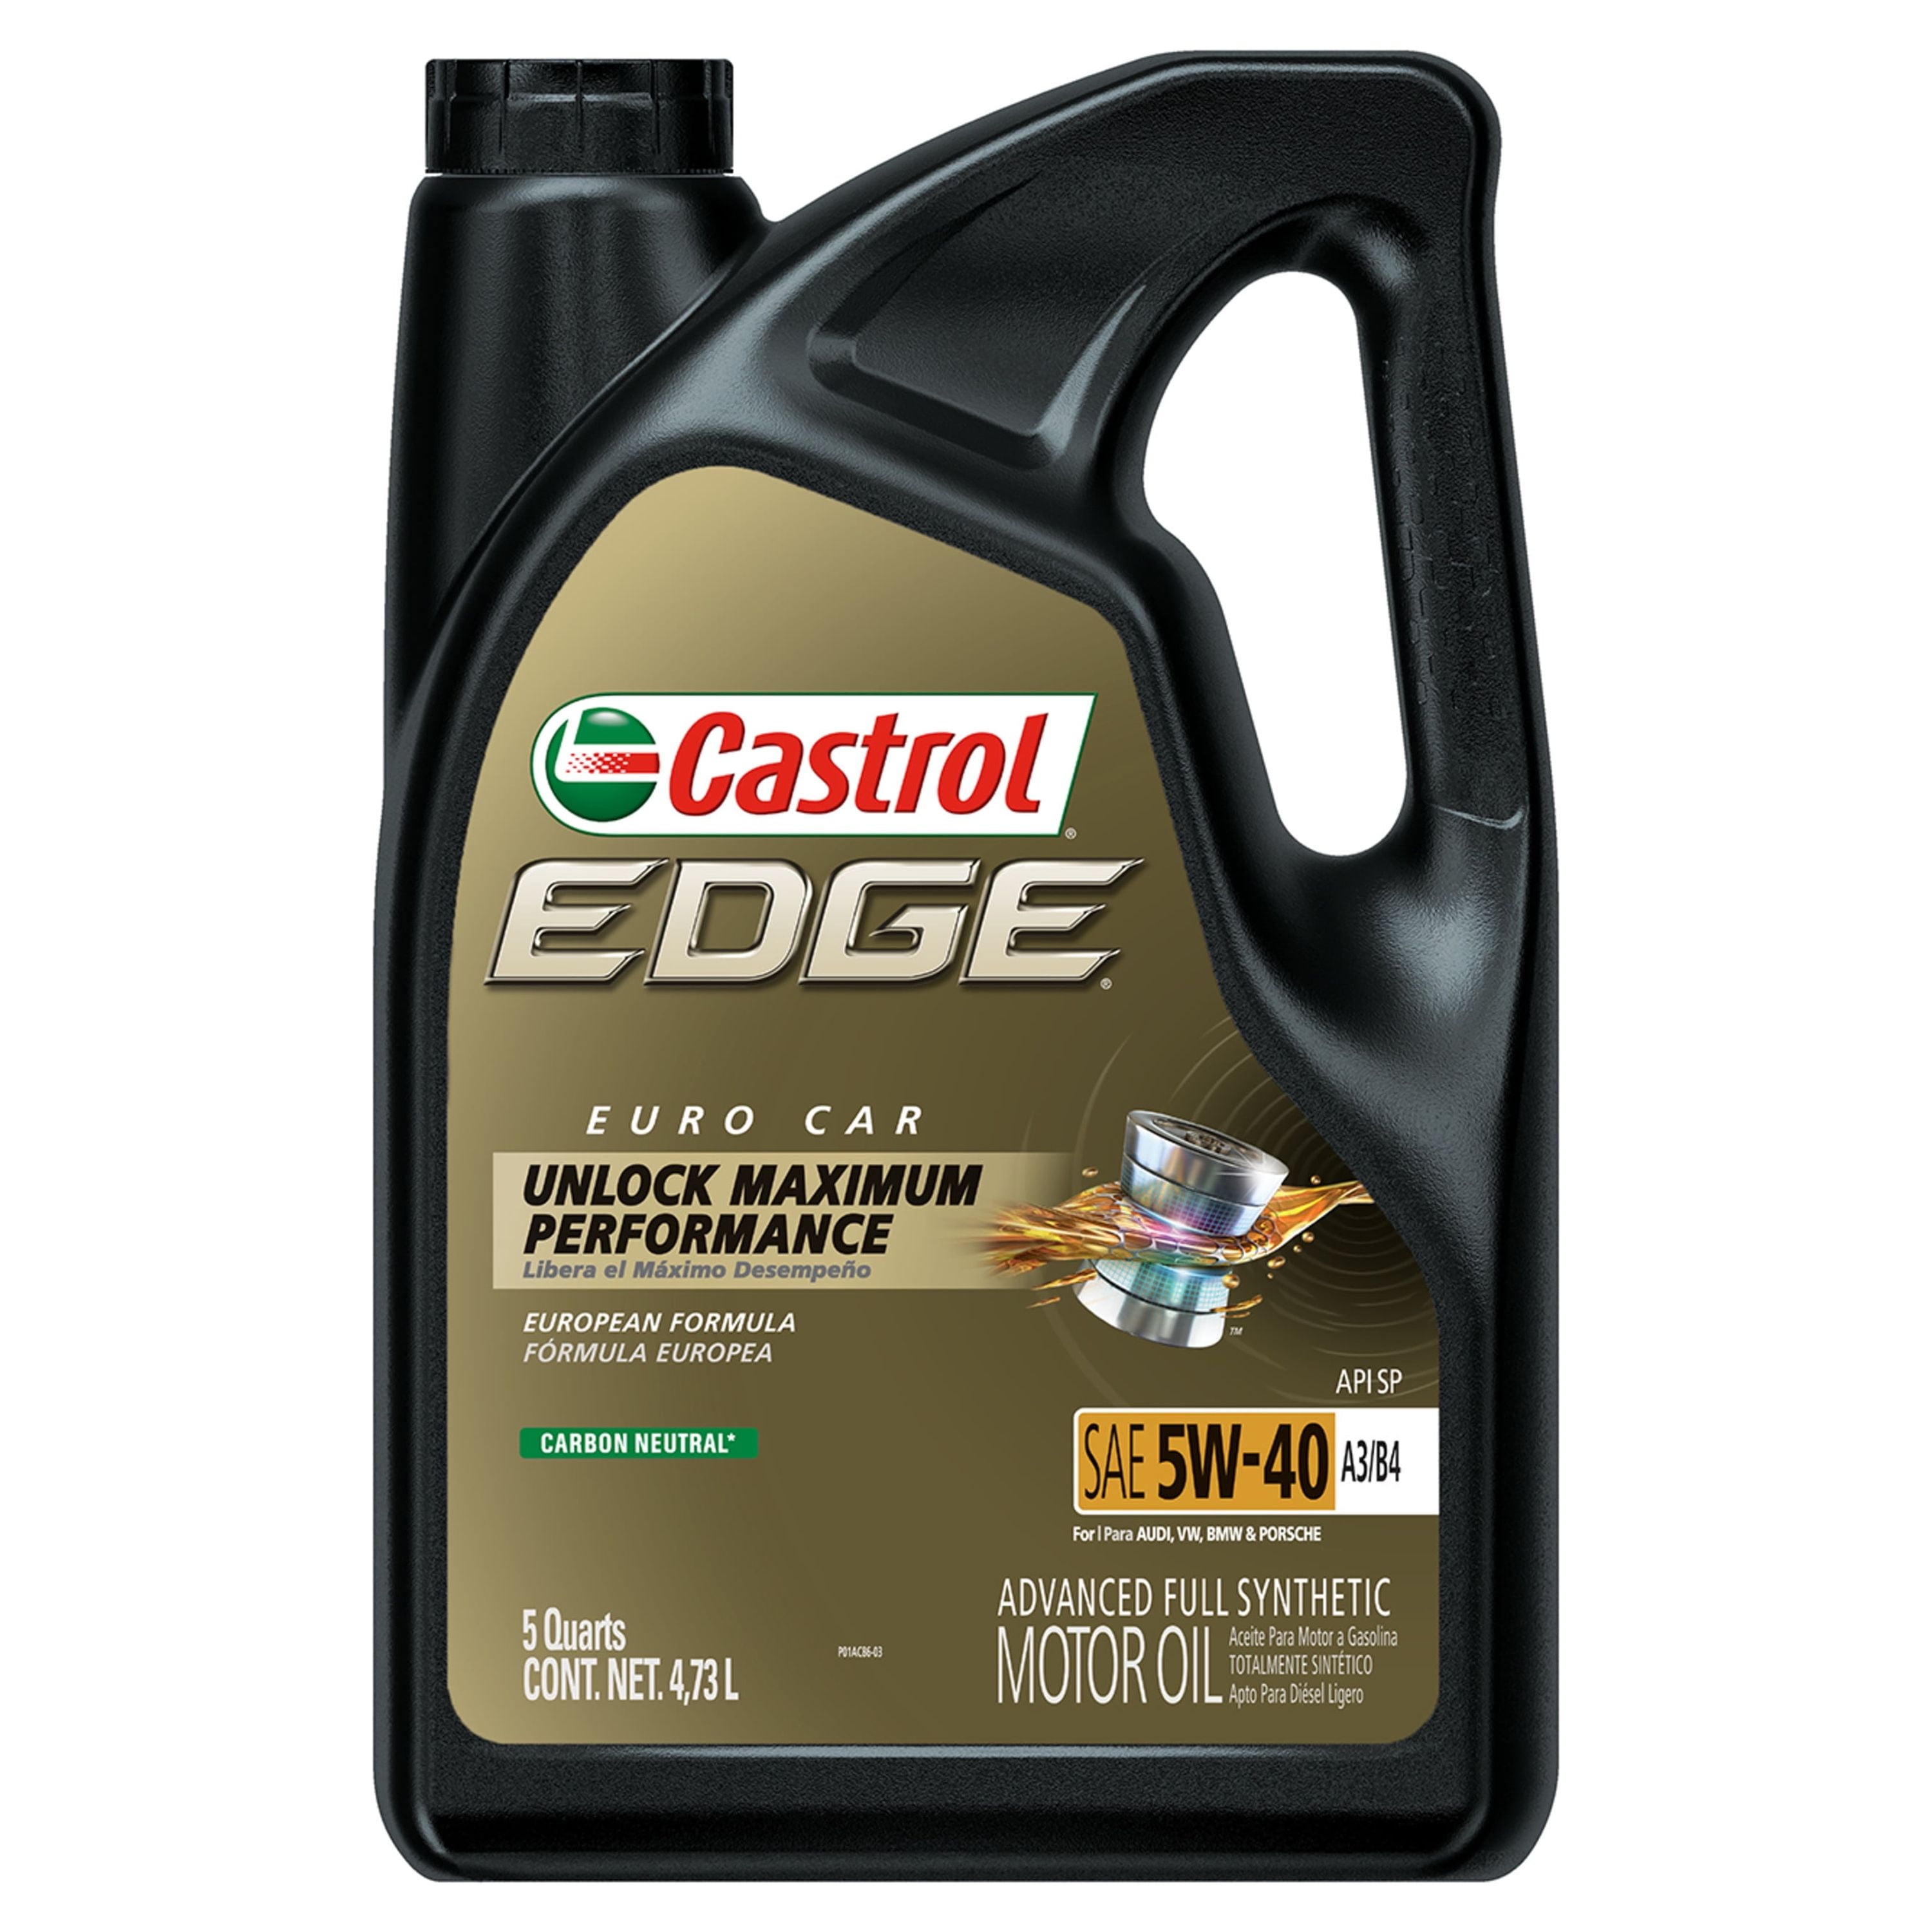 Castrol EDGE Euro 5W-40 A3/B4 Advanced Full Synthetic Motor Oil, 5 Quarts 